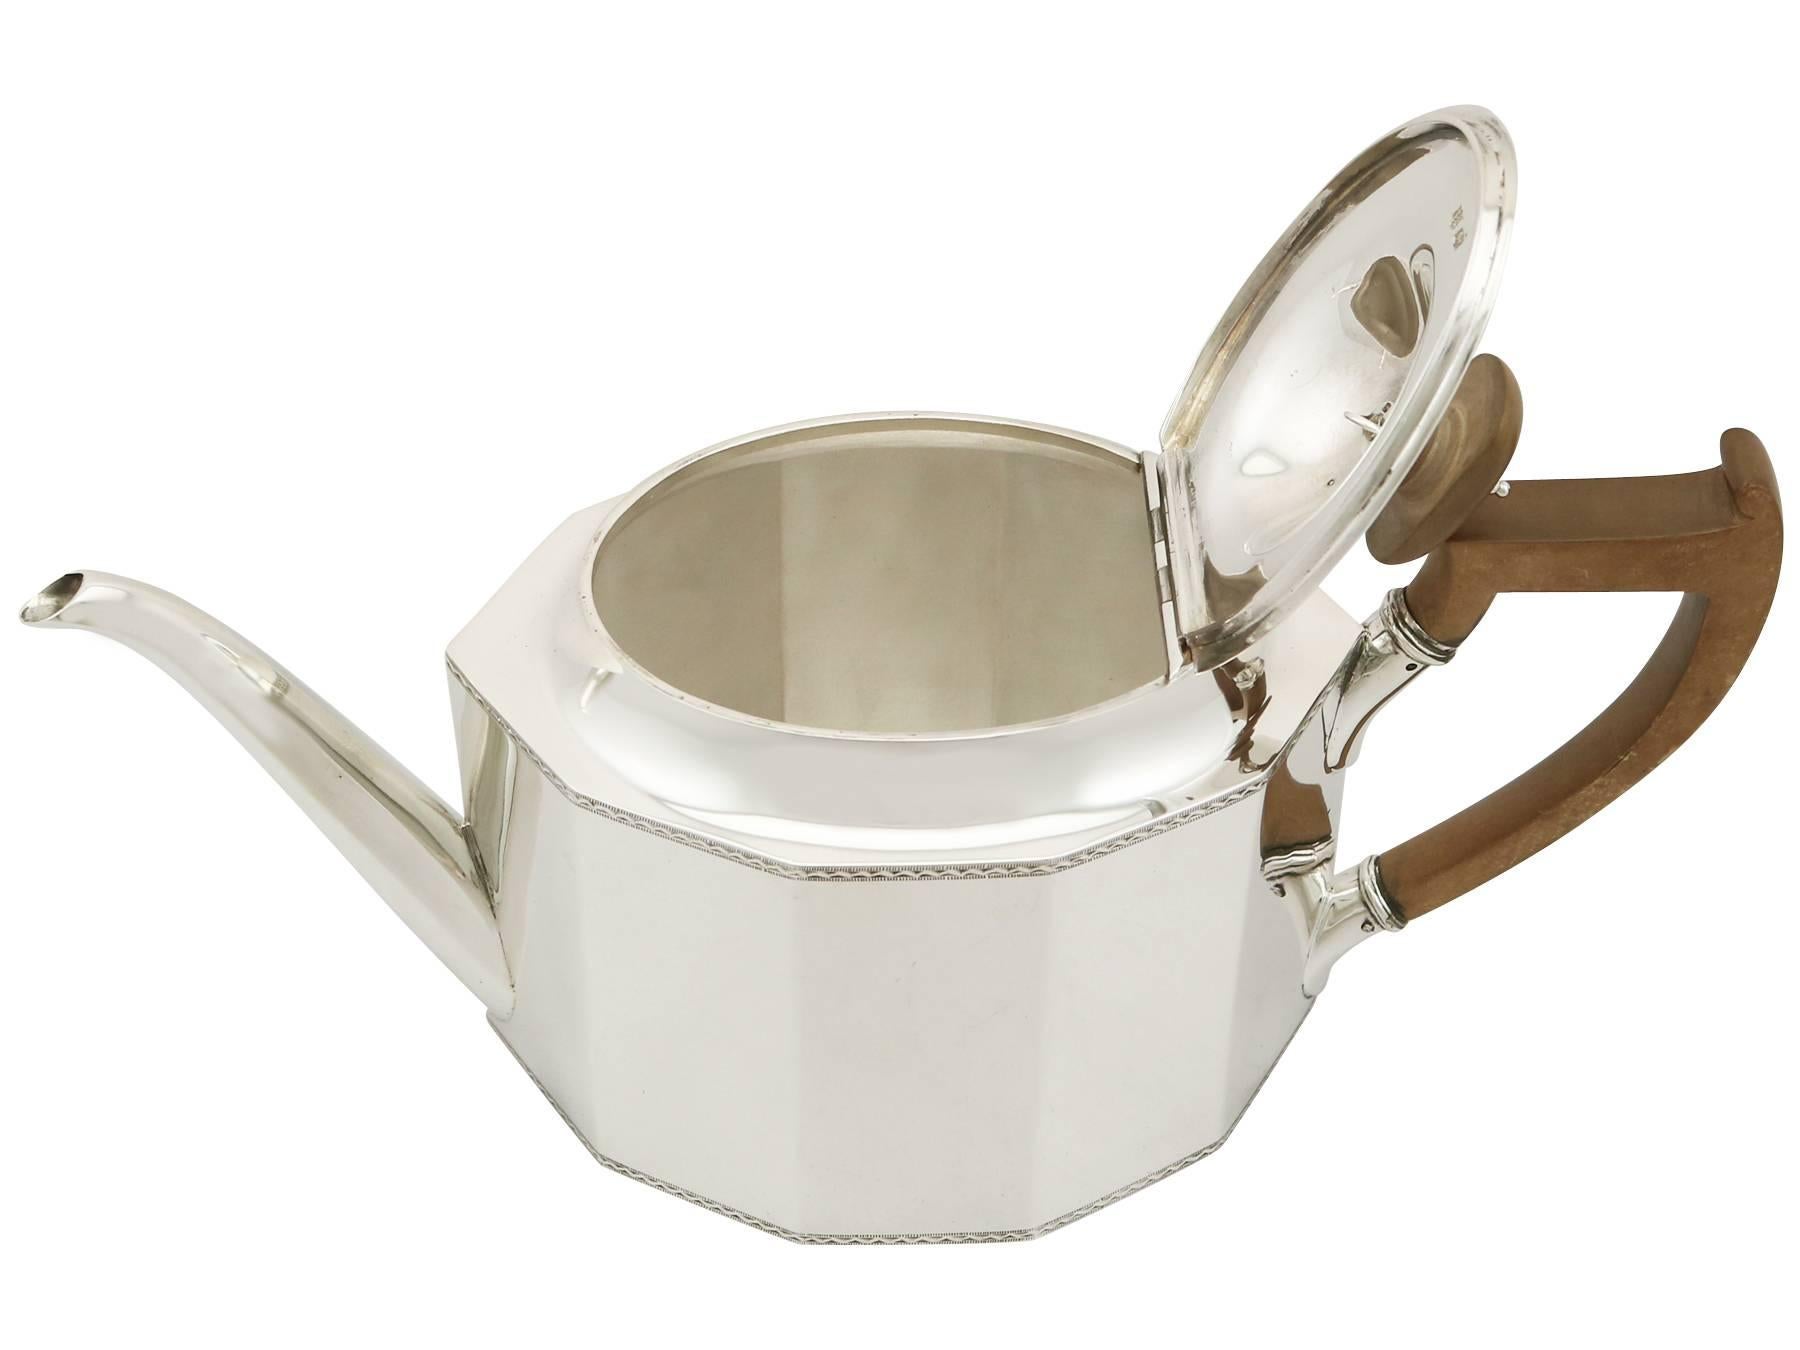 Antique 1920s Sterling Silver Teapot by Thomas Bradbury & Sons Ltd 1